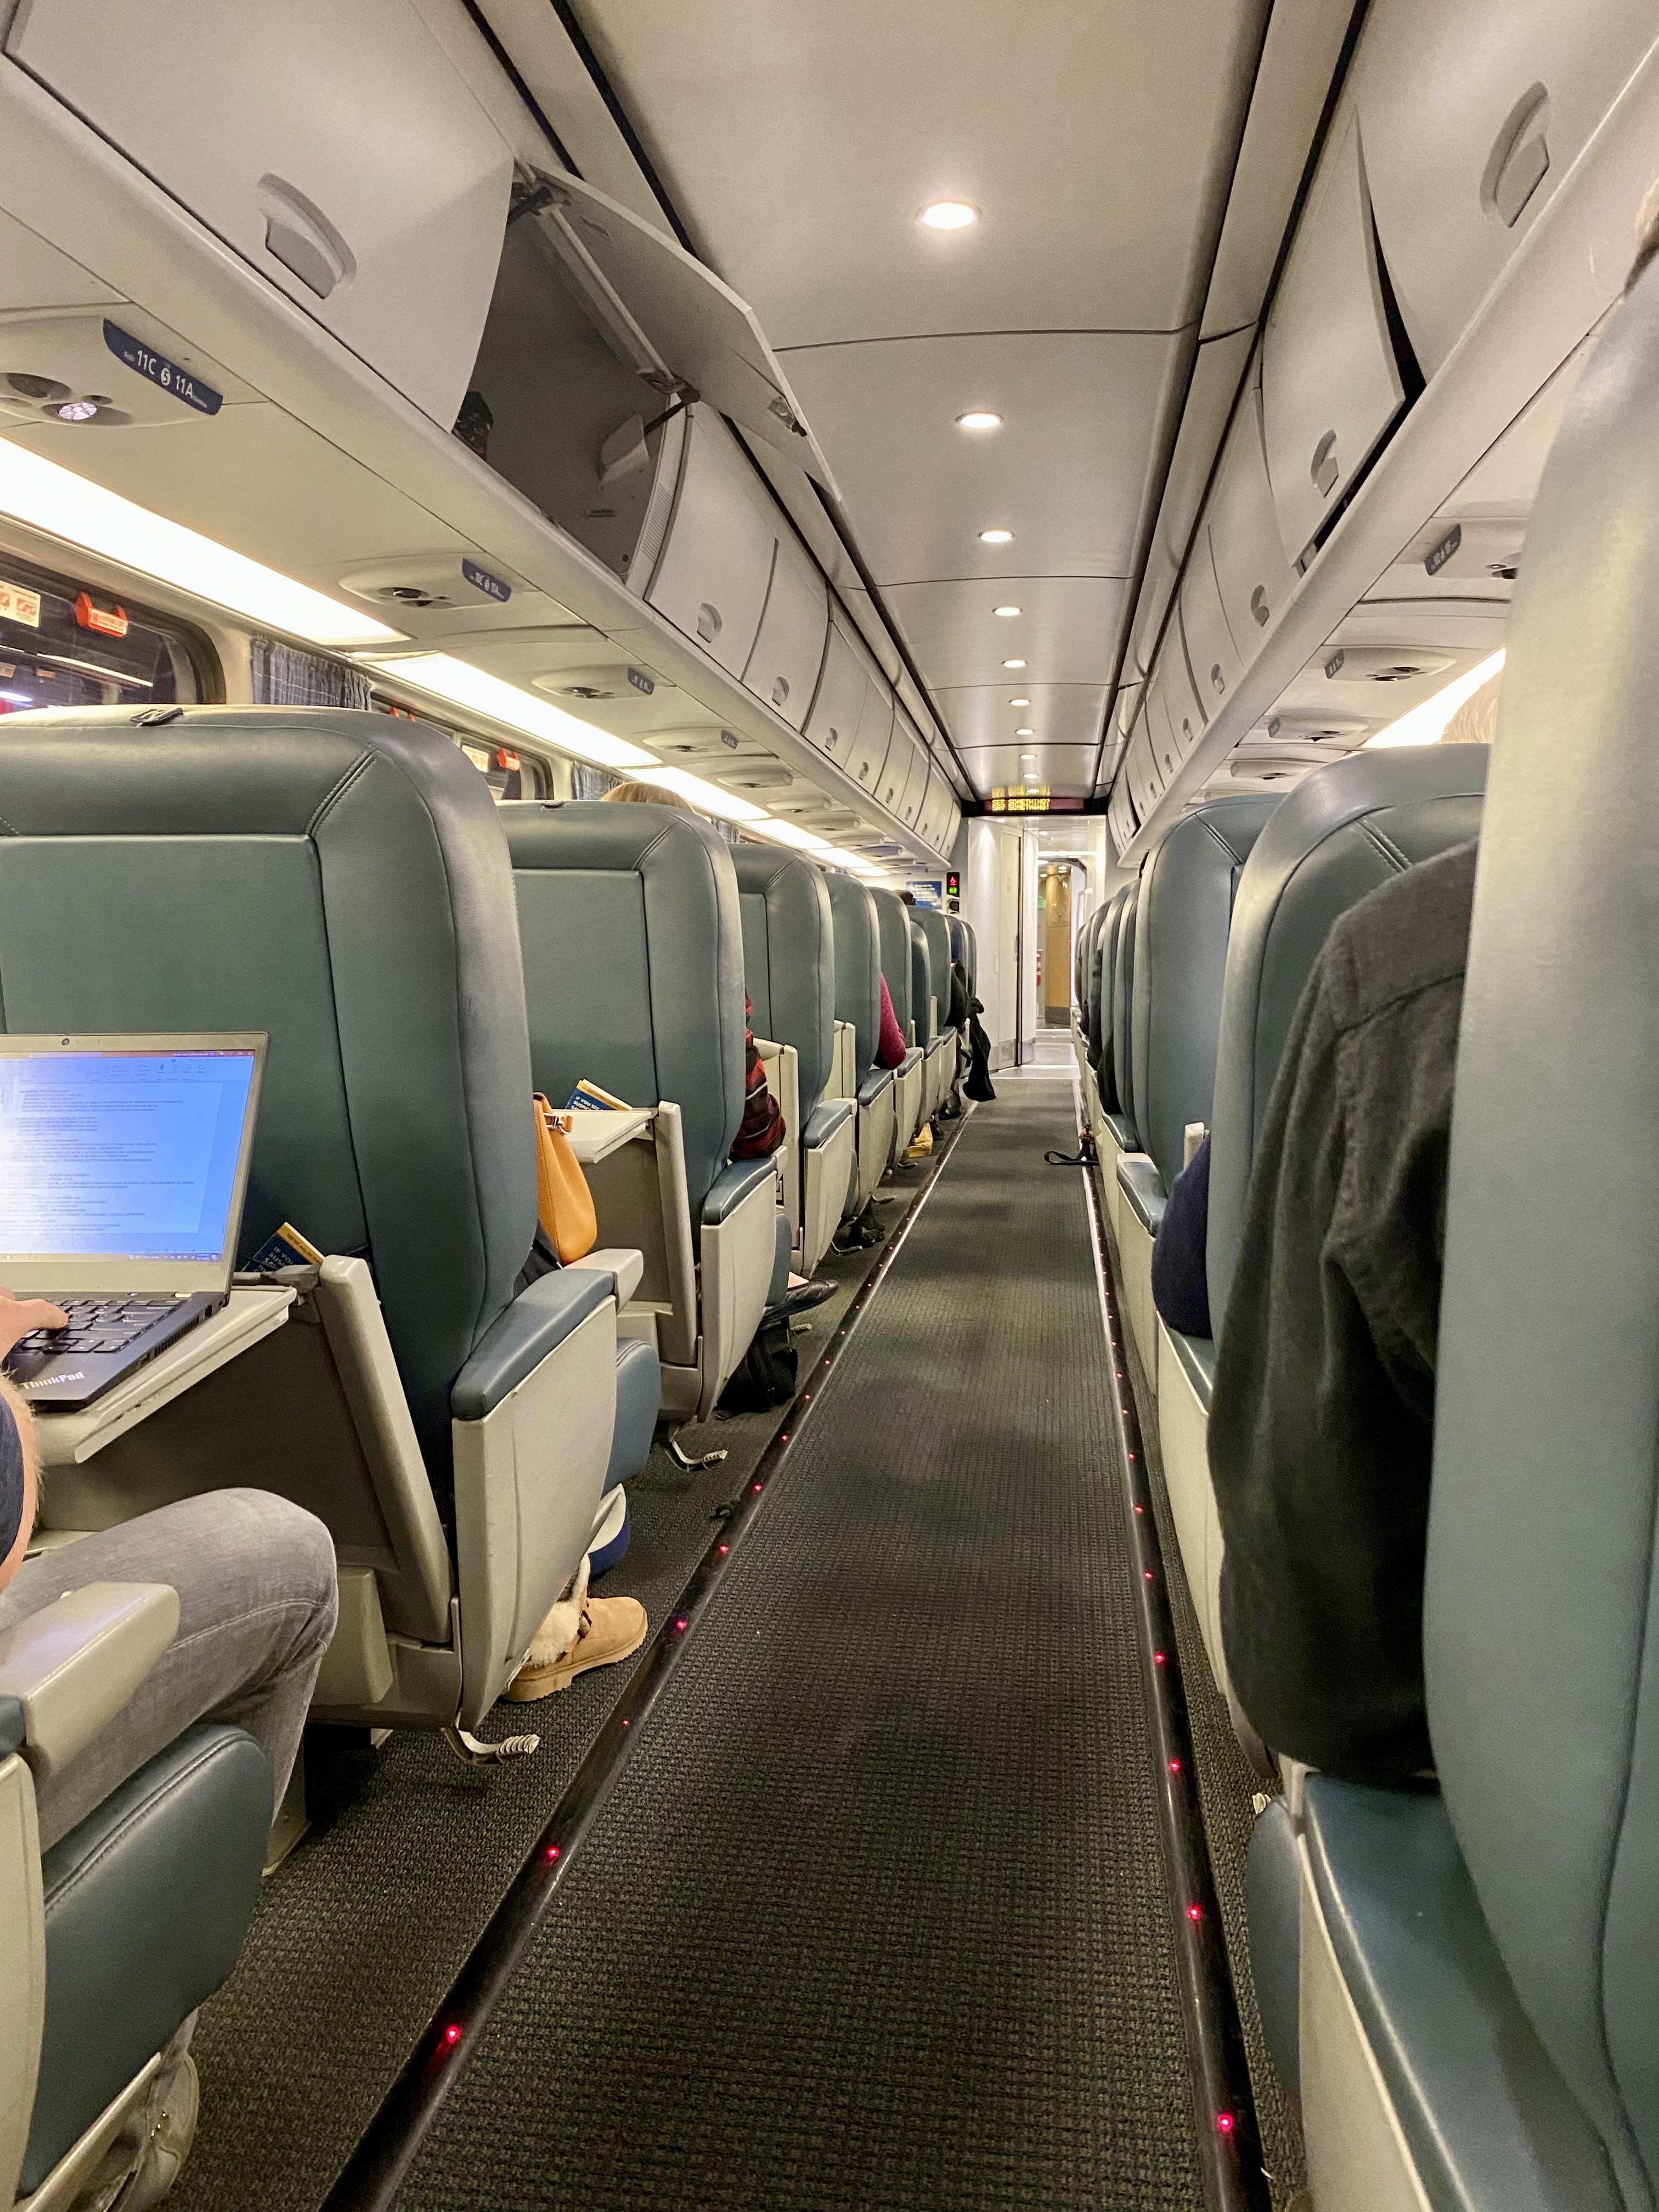 a row of seats on a train